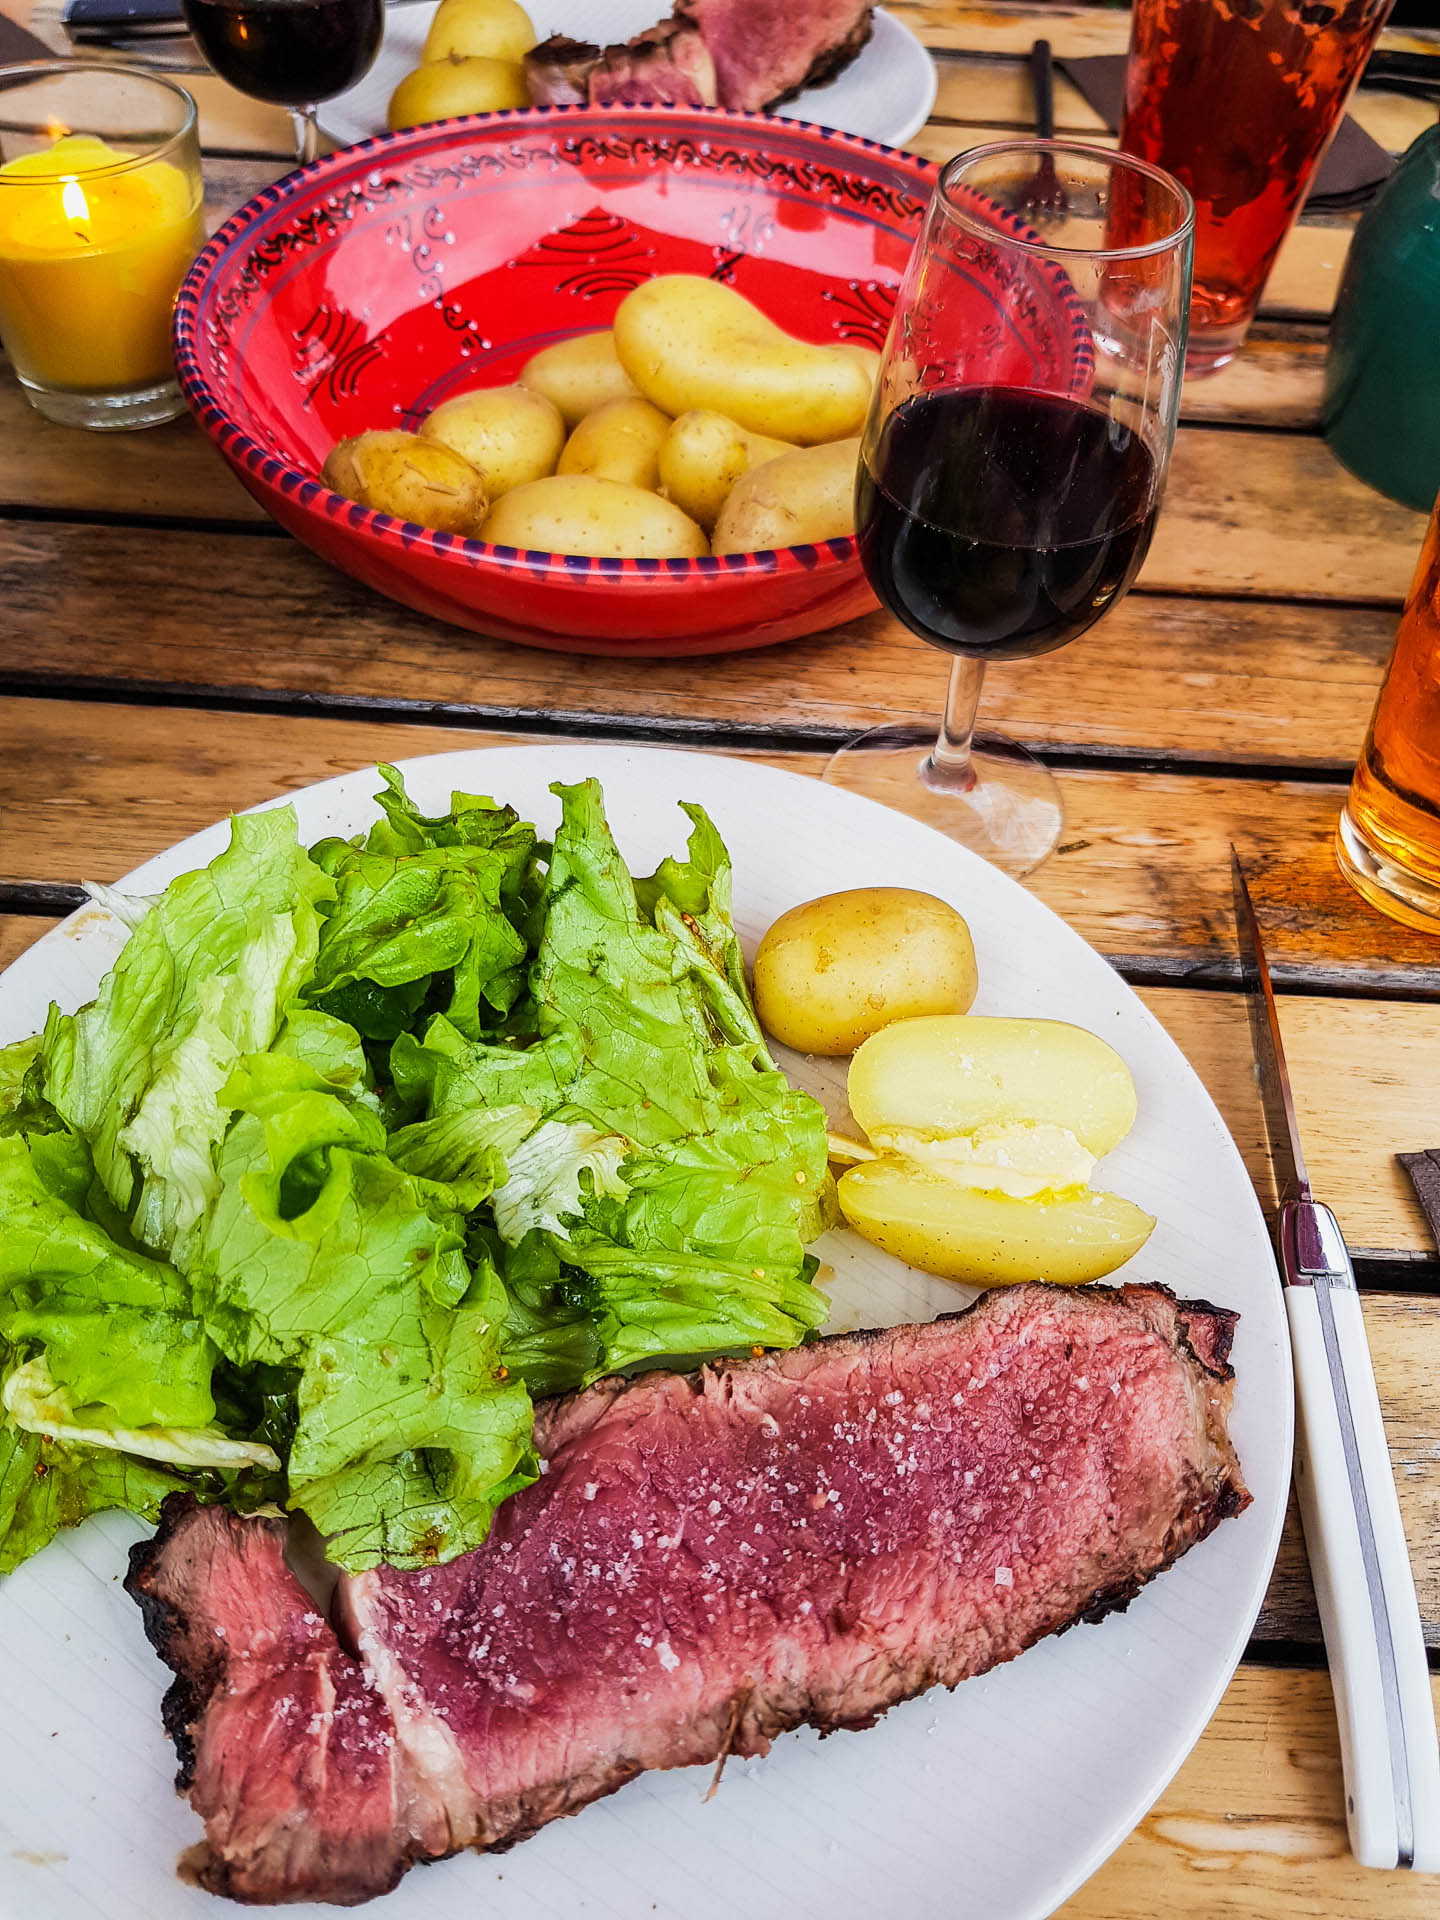 déjeuner barbecue viande rouge, pomme de terre salade et vin